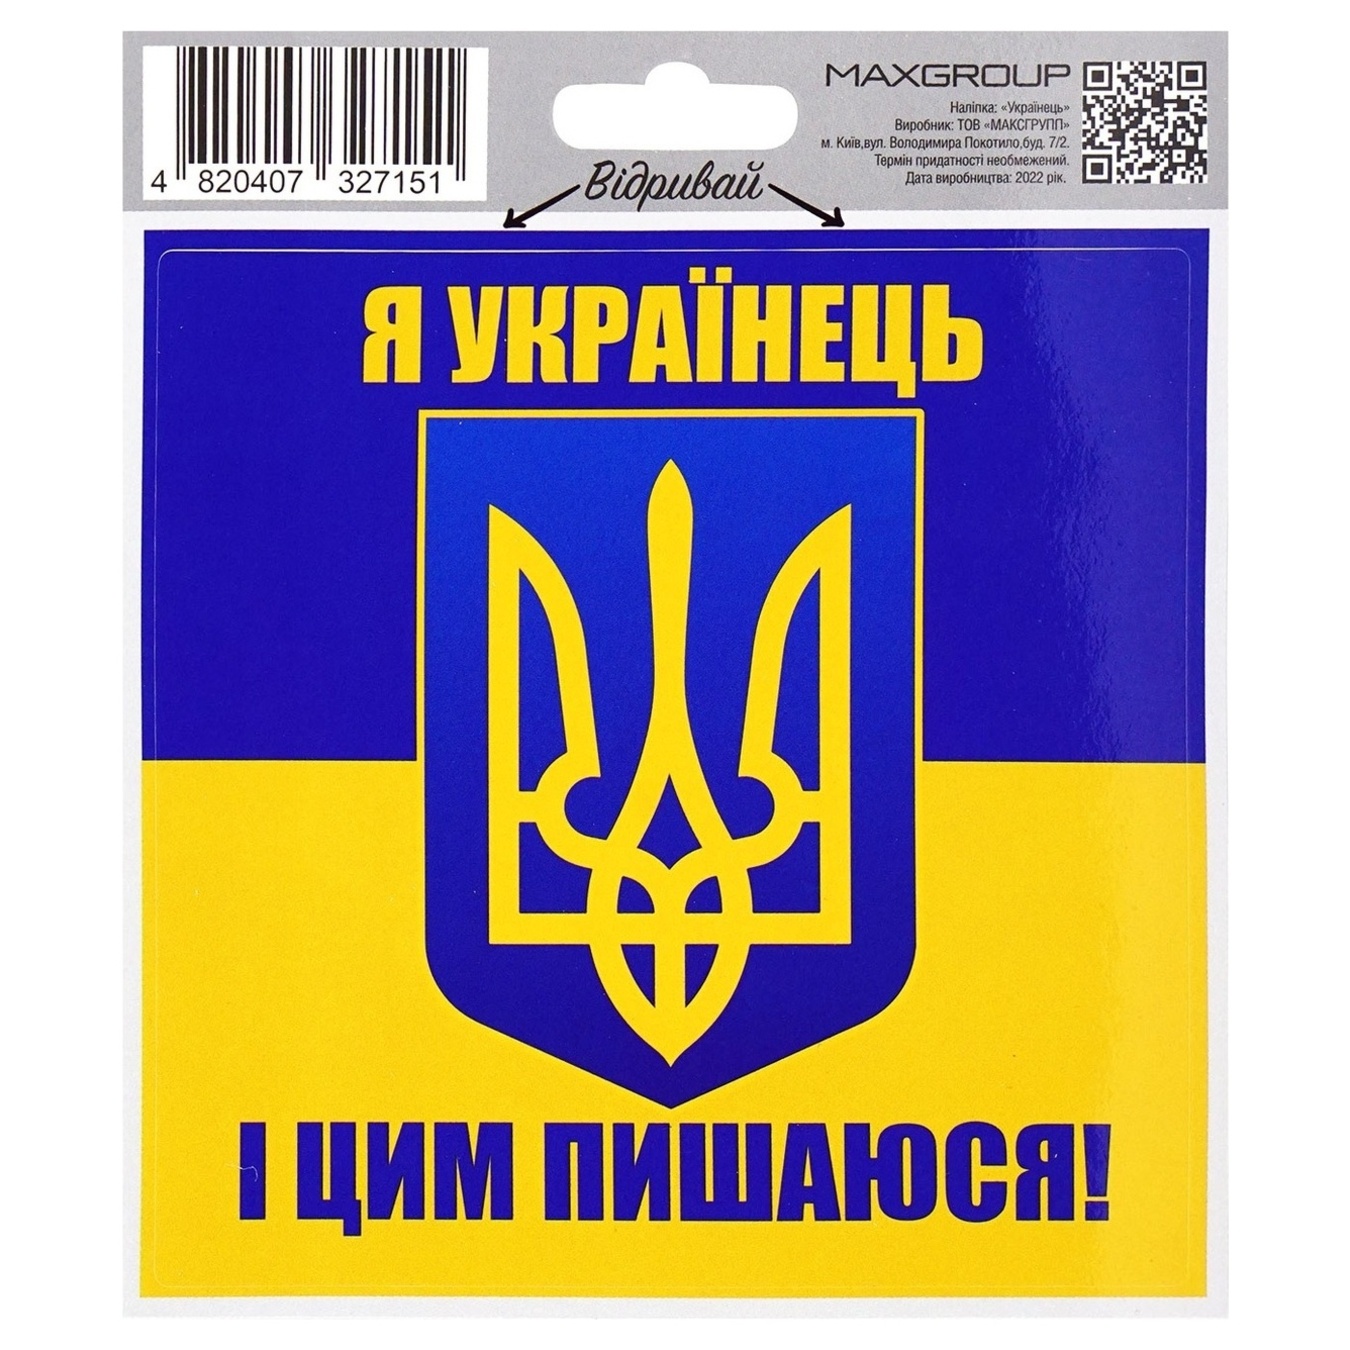 Ukrainian car sticker